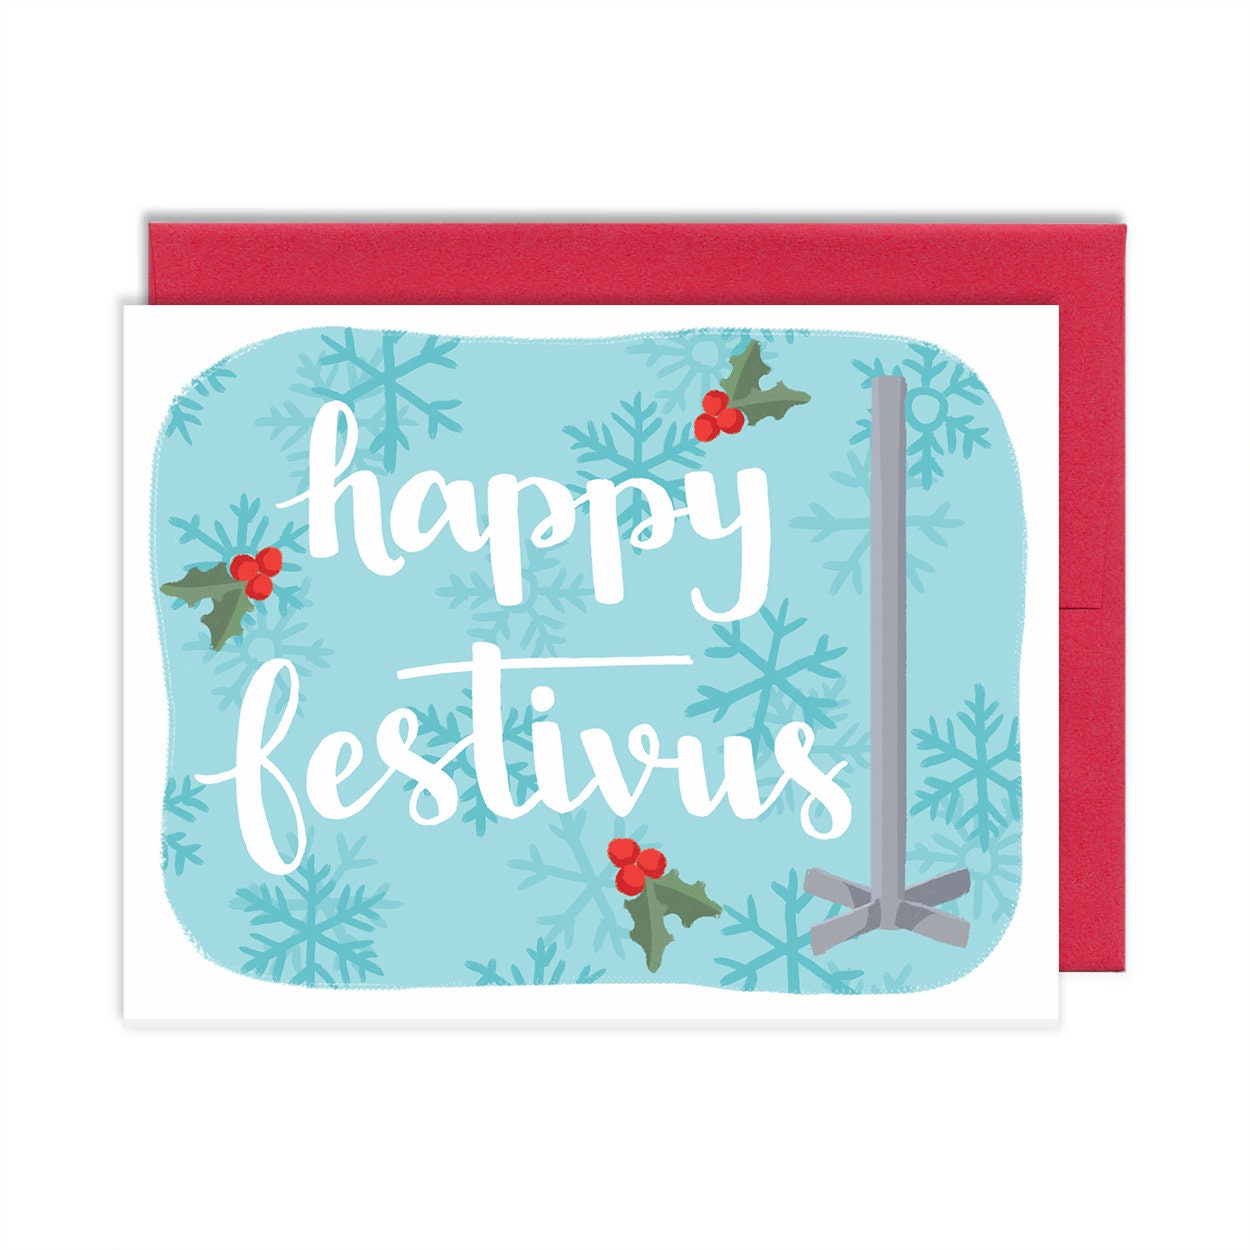 Happy Festivus Greeting Card